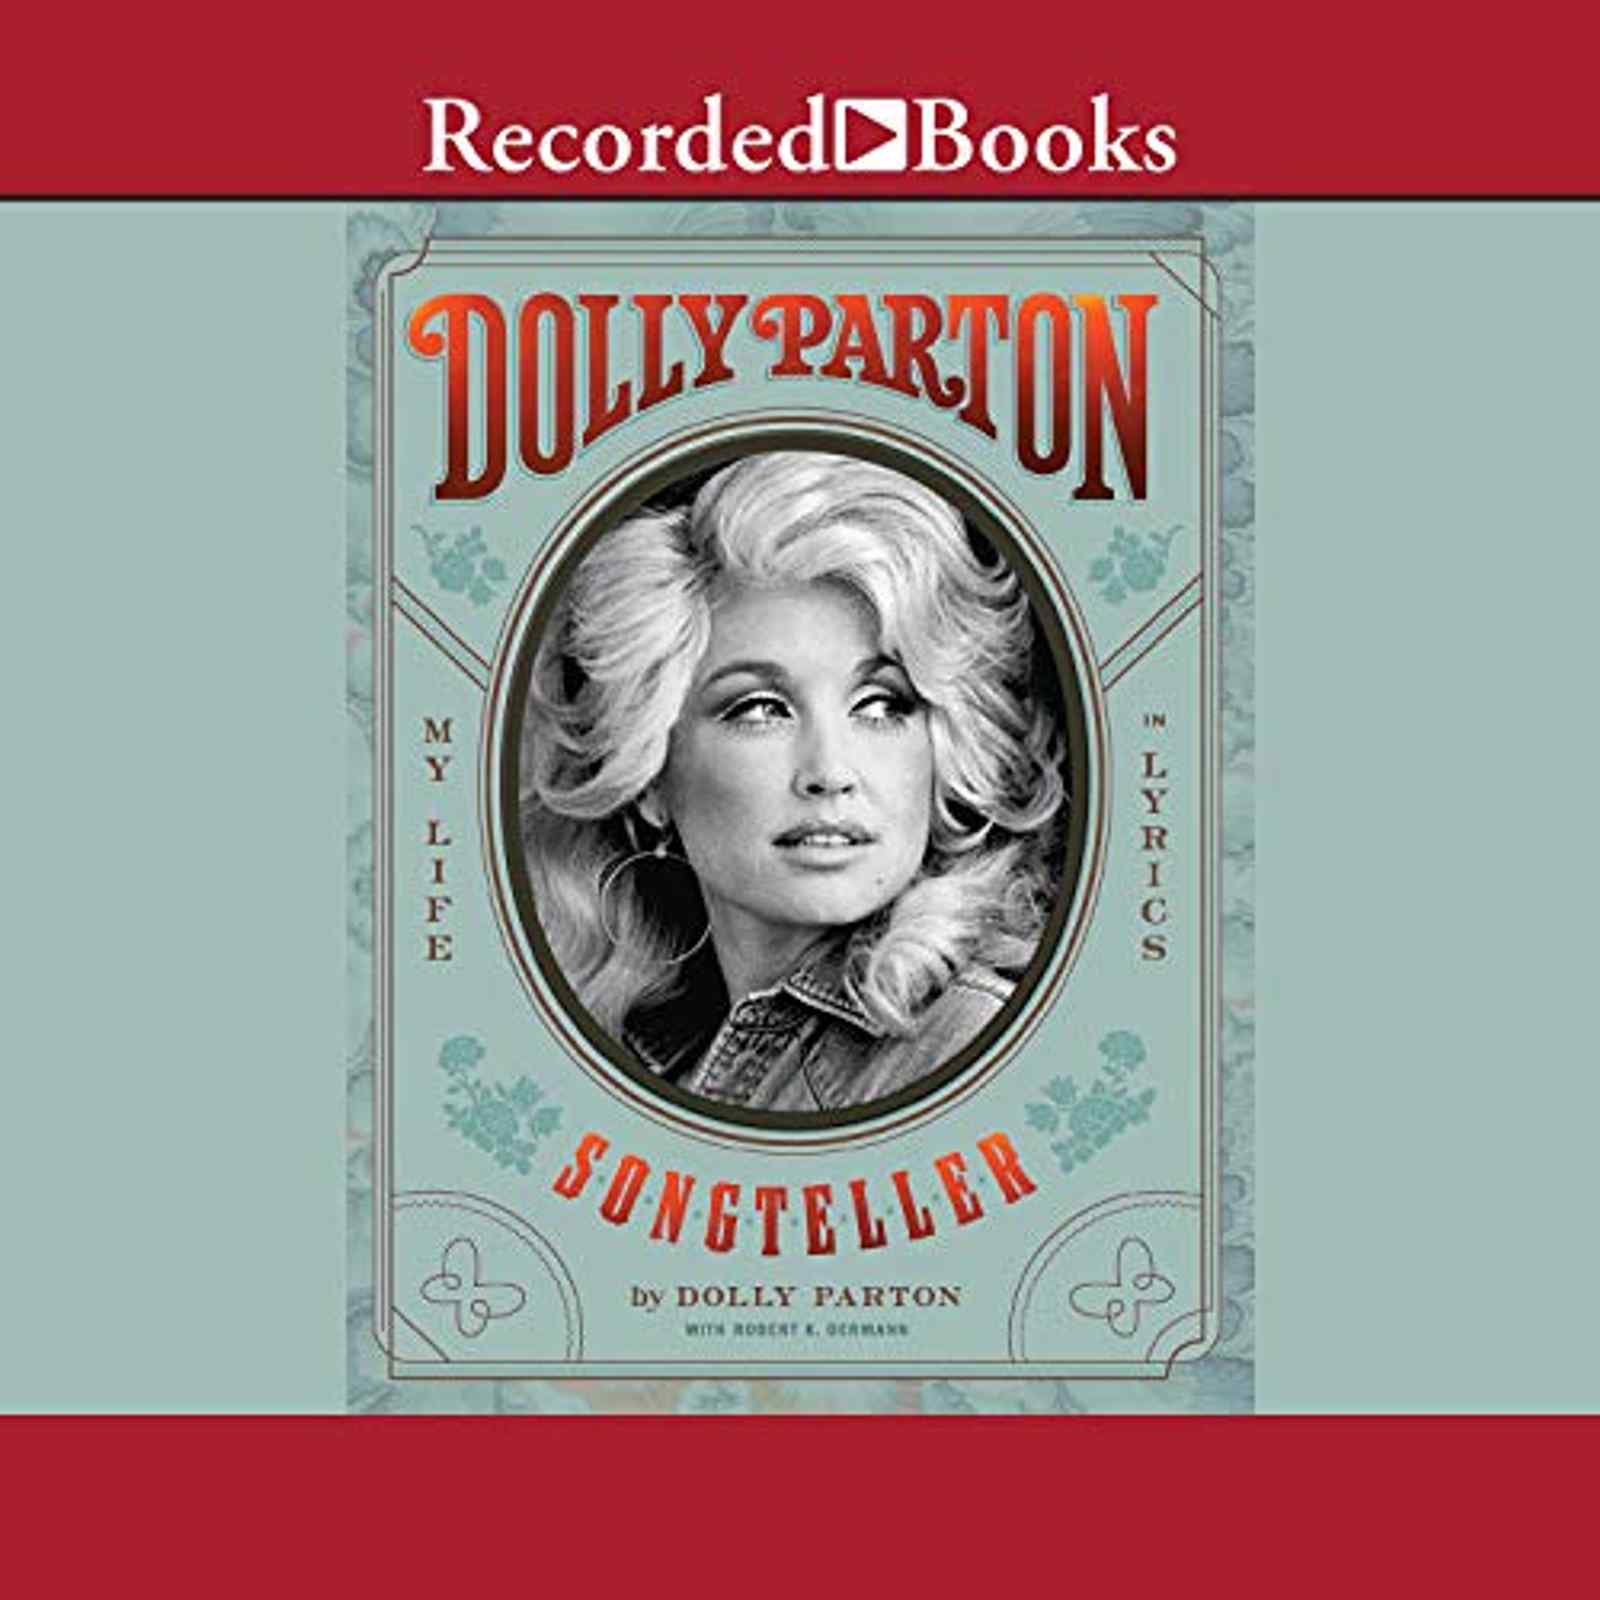 Dolly Parton, Songteller: My Life in Lyrics (Audiobook)